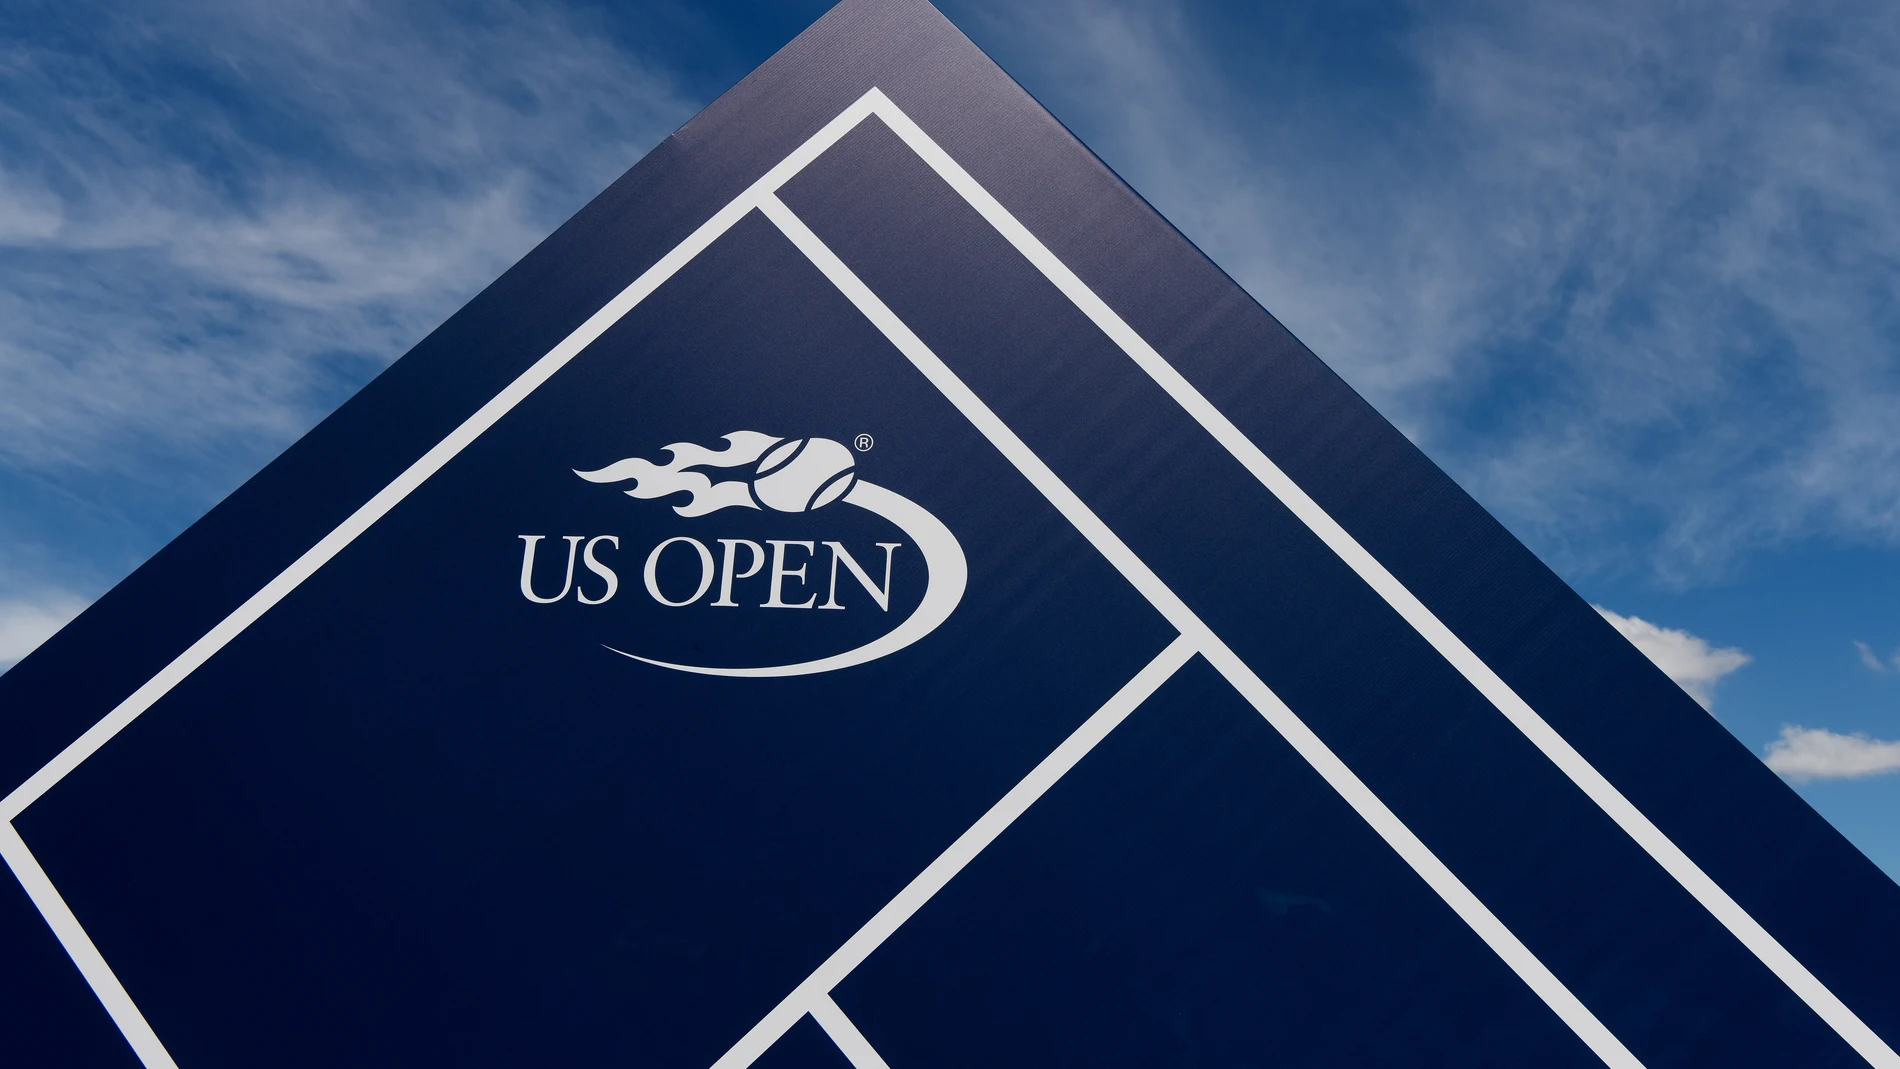 El logo del US Open